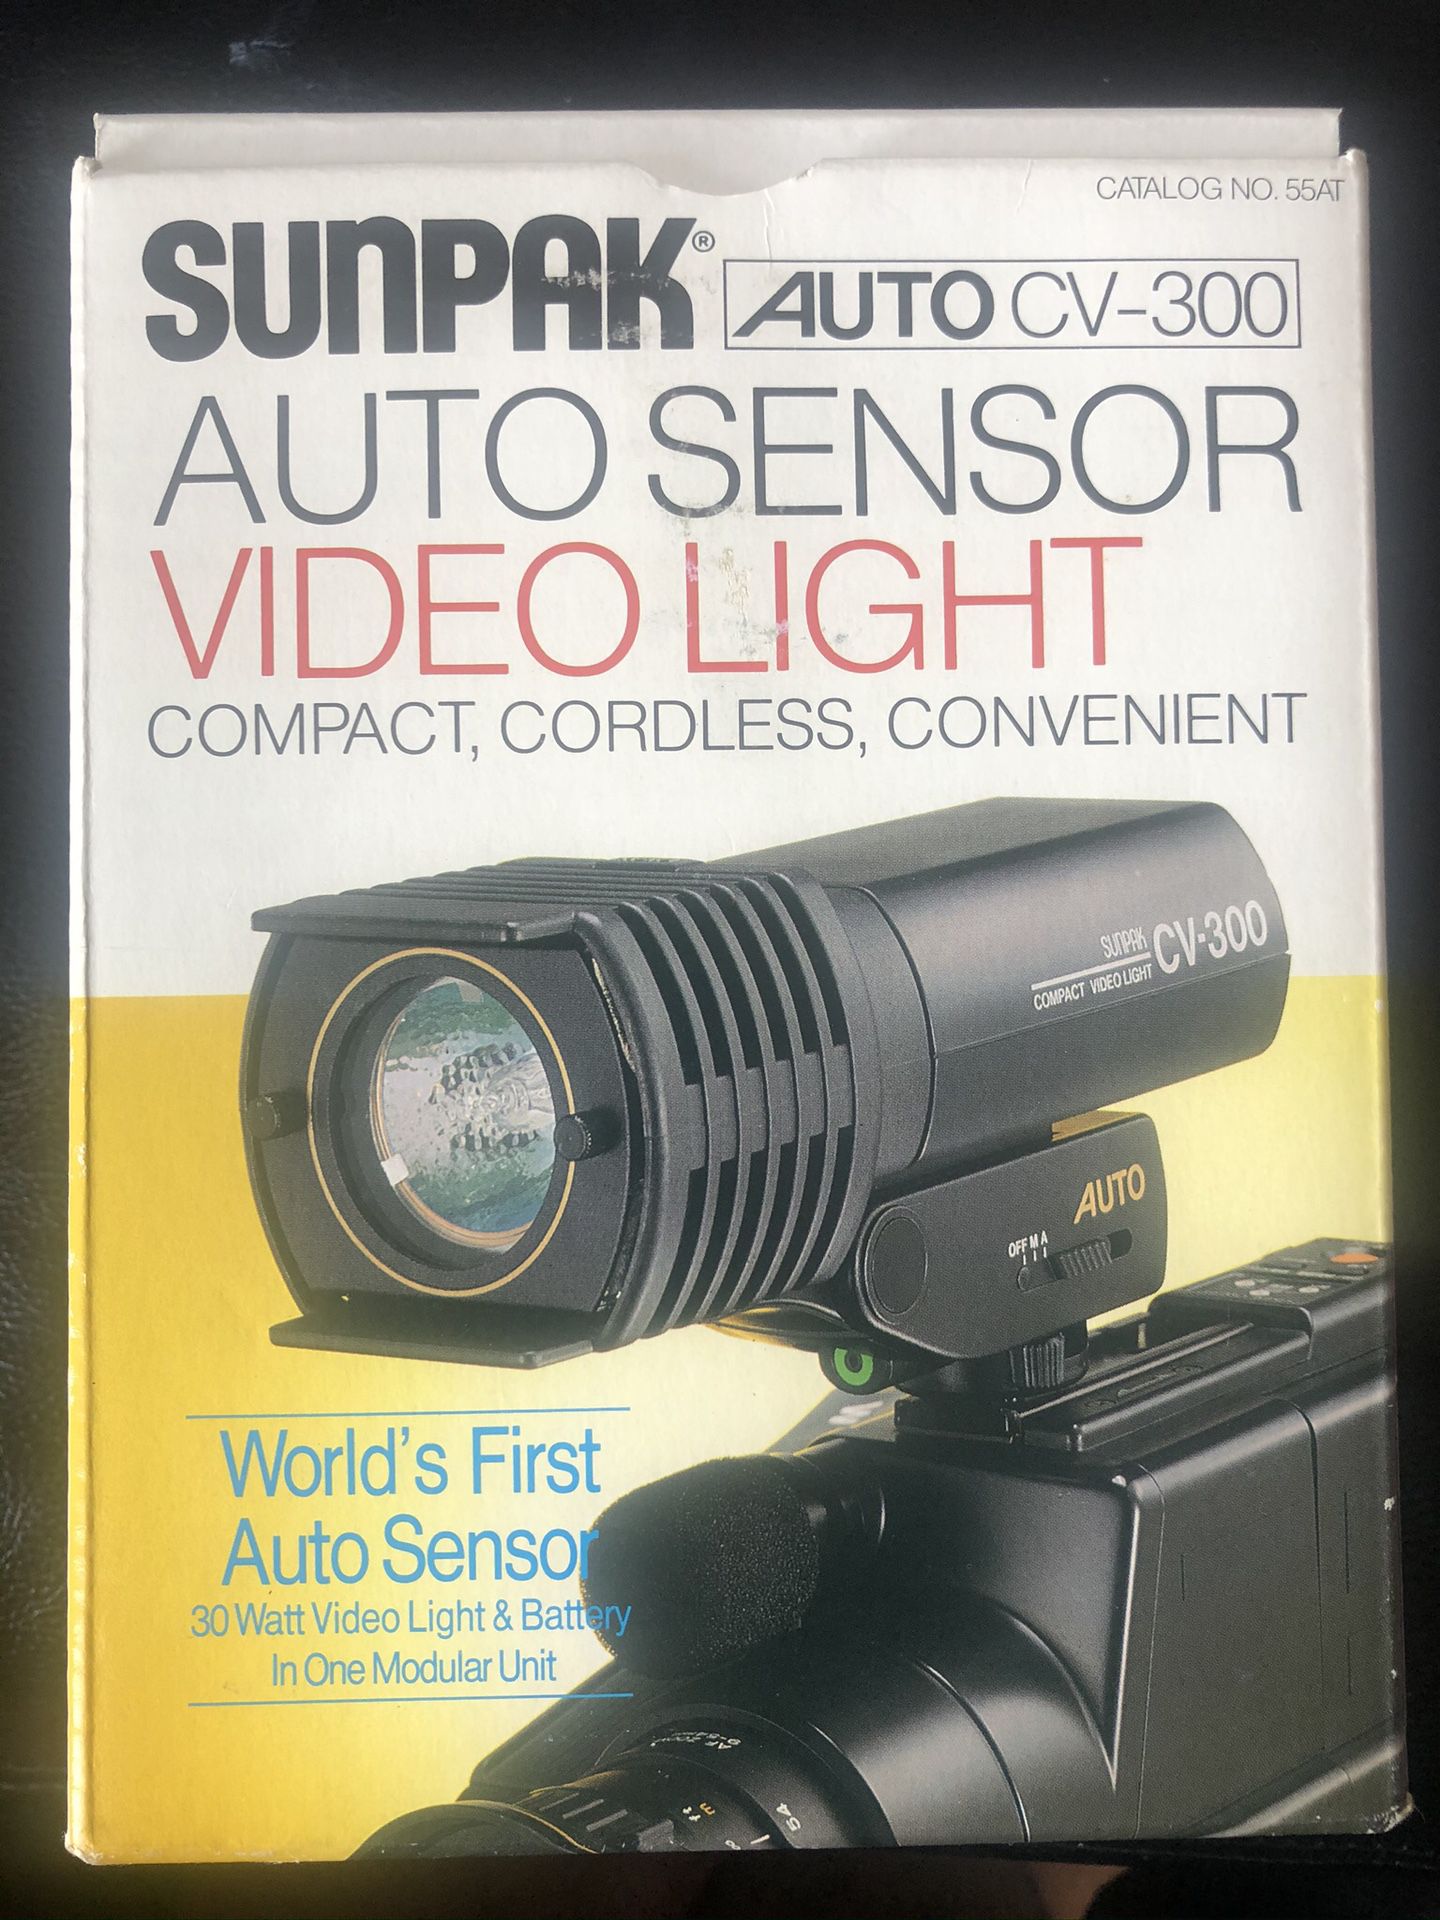 Auto Sensor Video Light